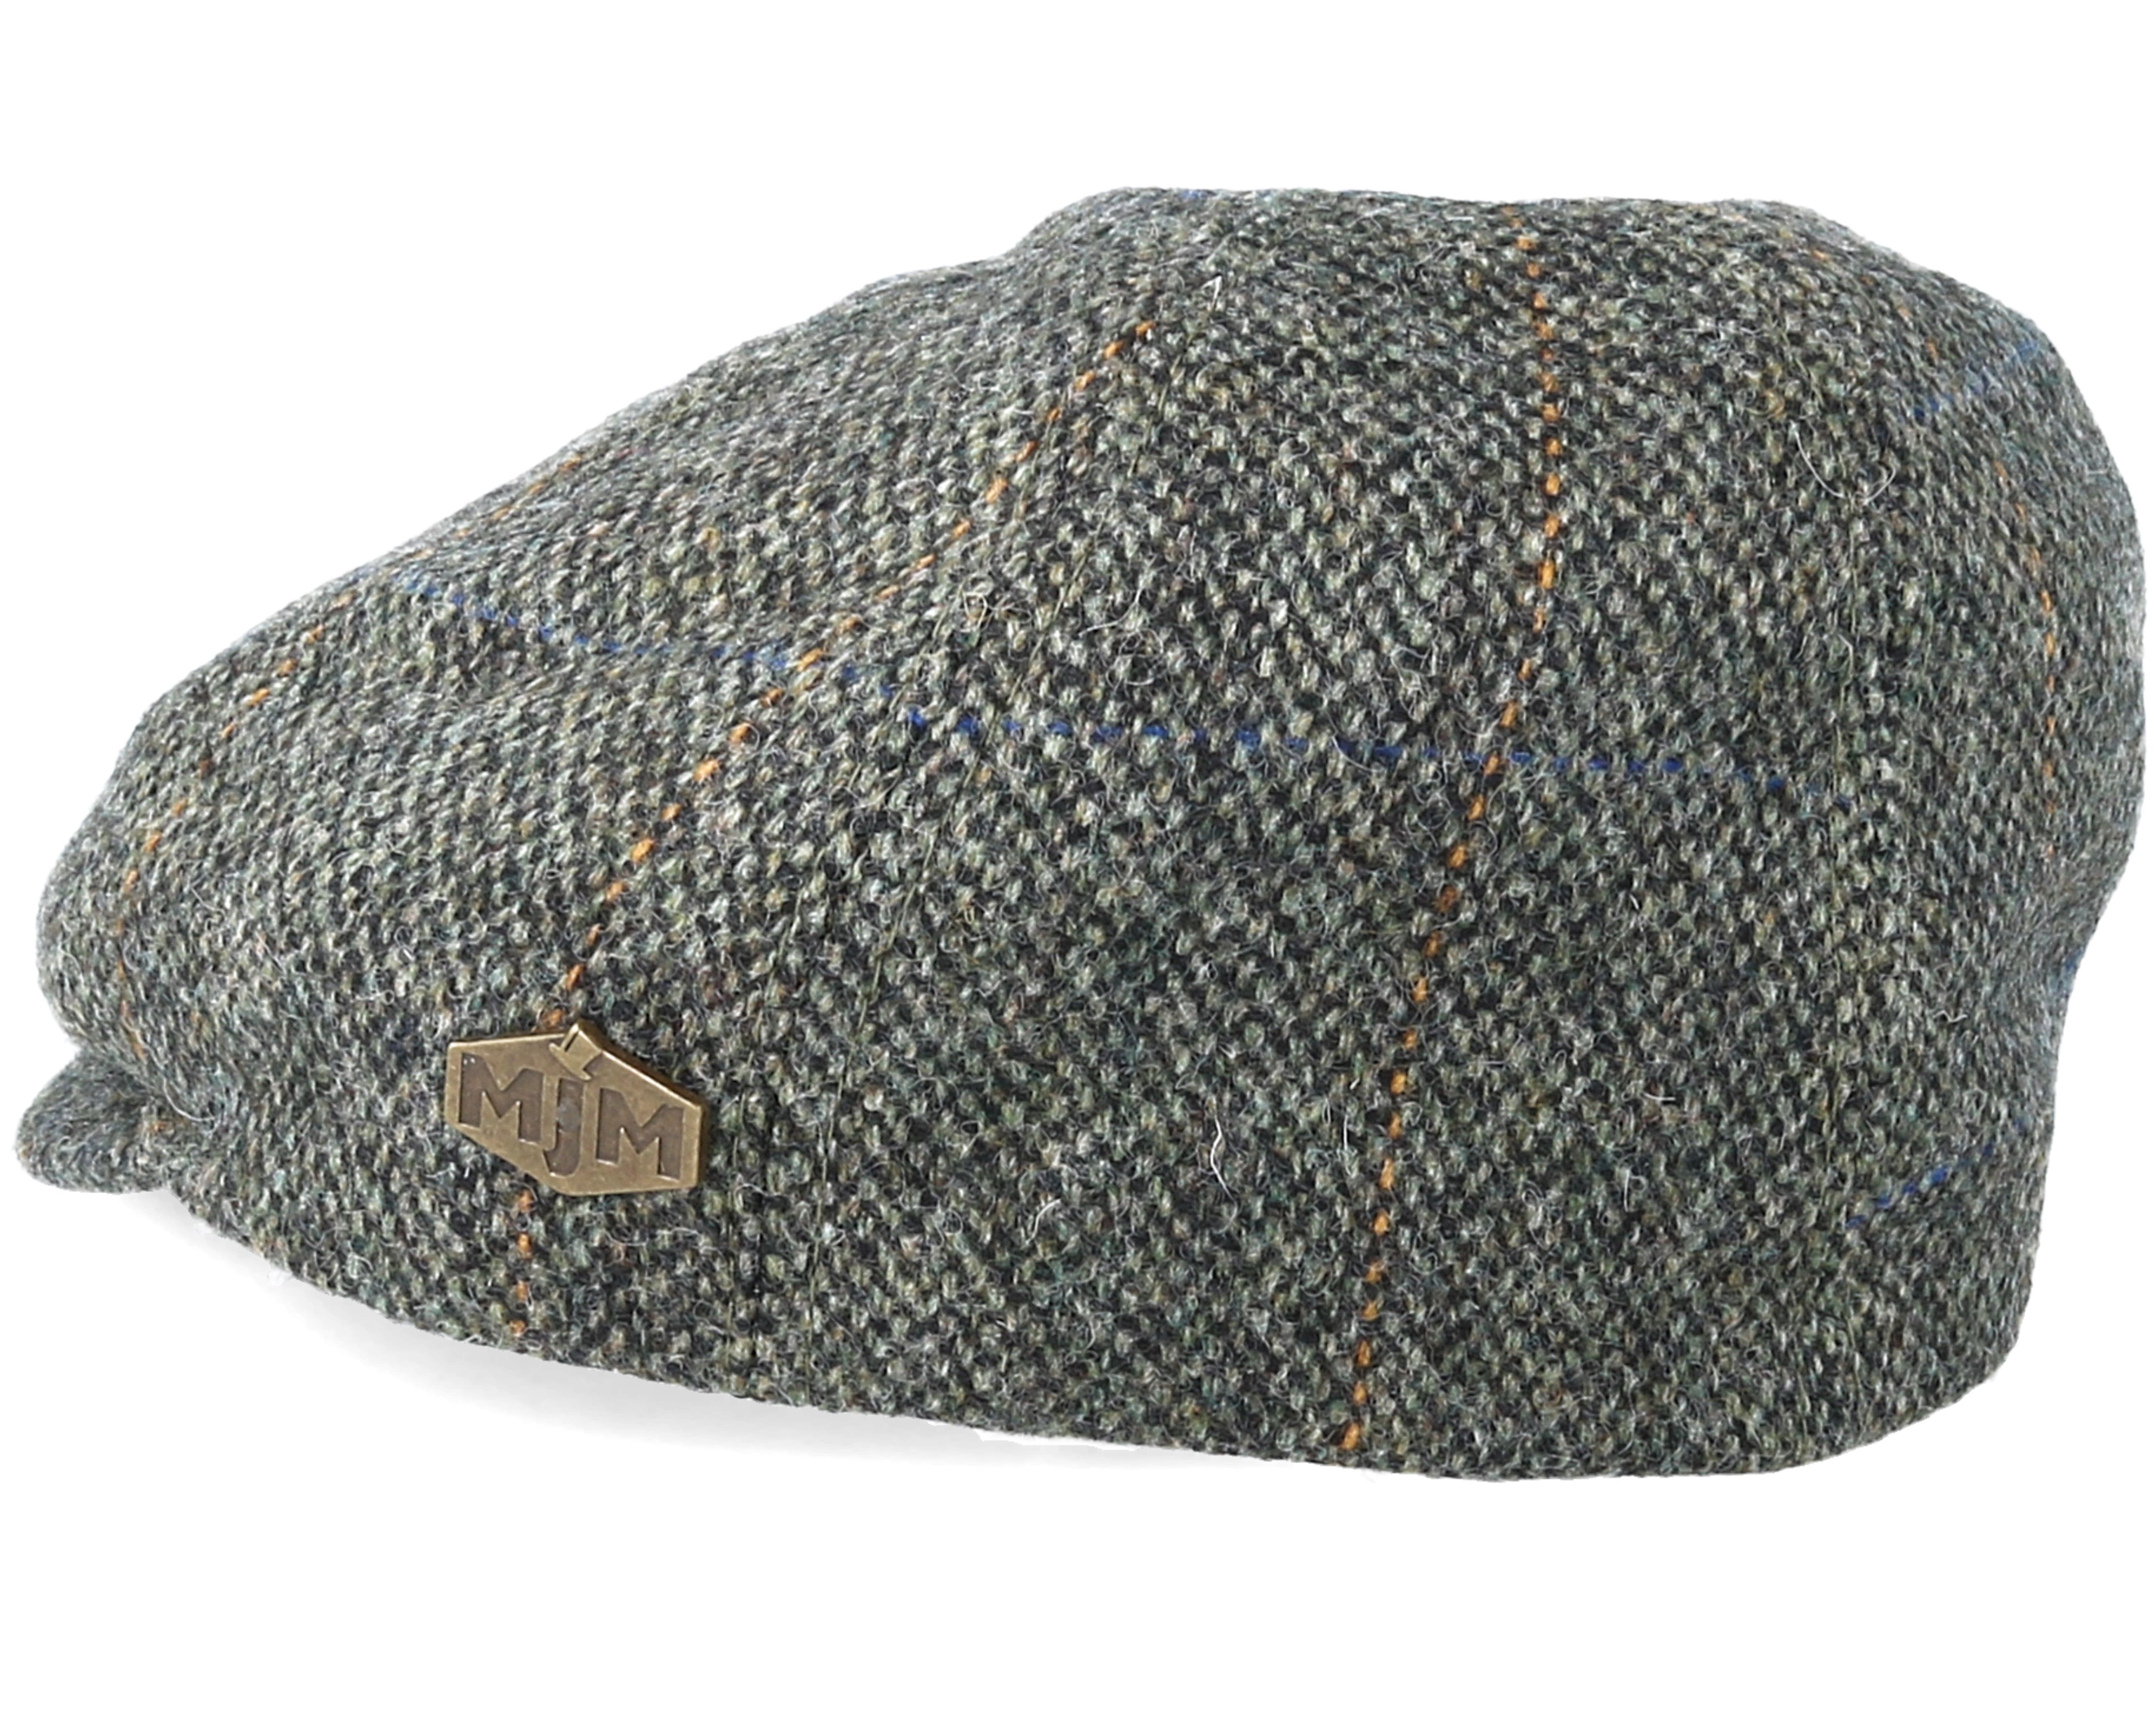 Broker 100% Virgin Wool 4 Green Flat Cap - MJM Hats caps ...